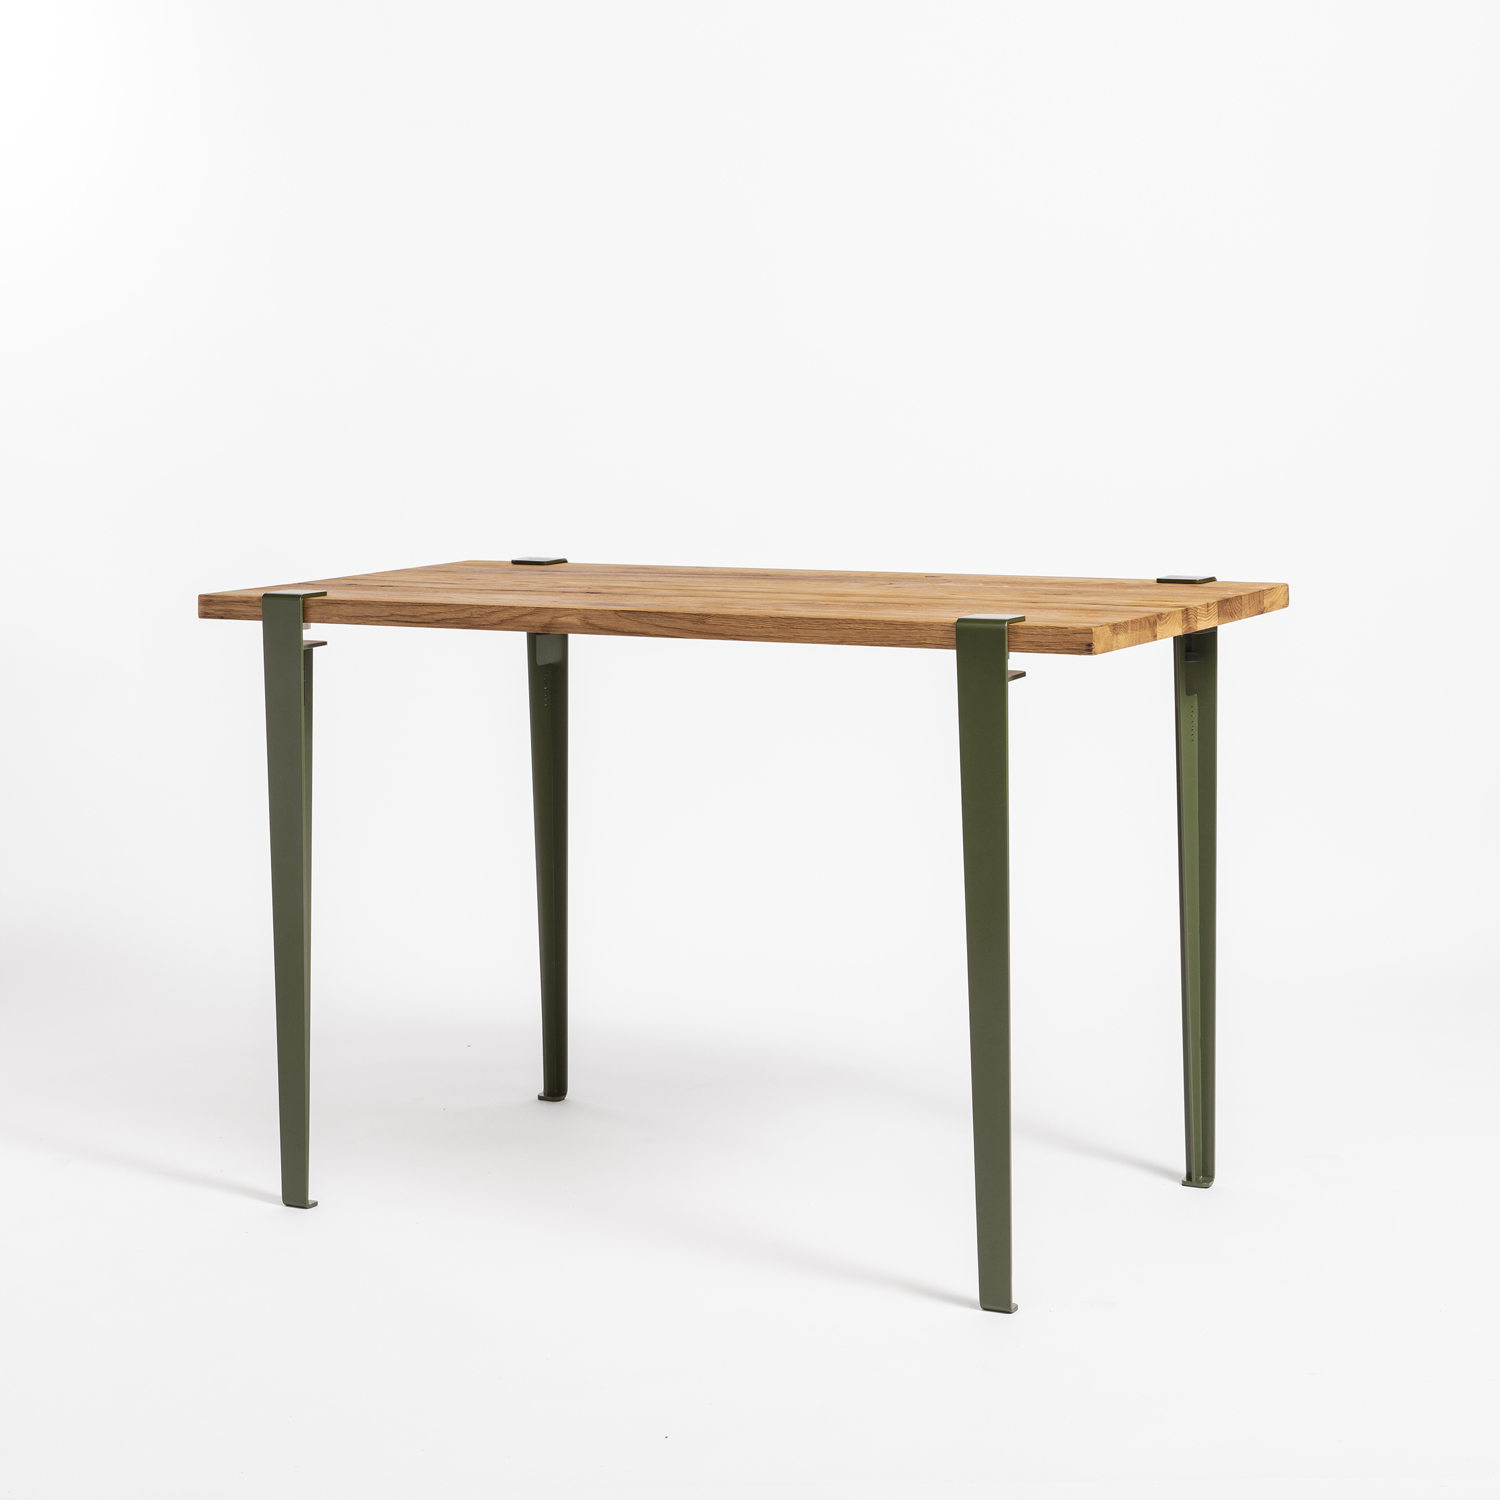 LOBO table in reclaimed wood